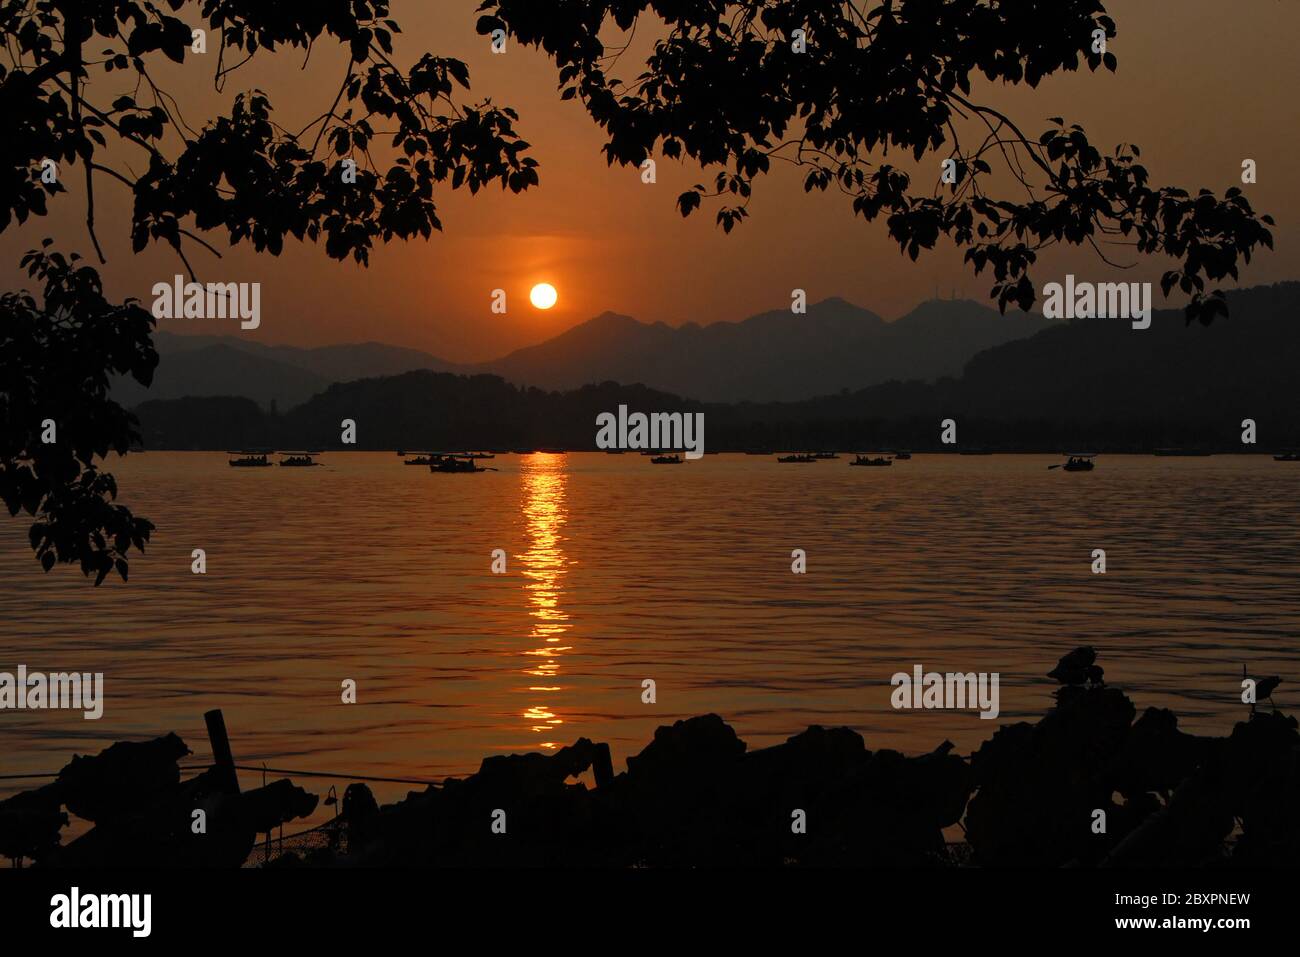 West Lake (Xi Hu) sunset in Hangzhou, Zhejiang Province, China. View of West Lake in Hangzhou at sunset with an orange light across the lake. Stock Photo